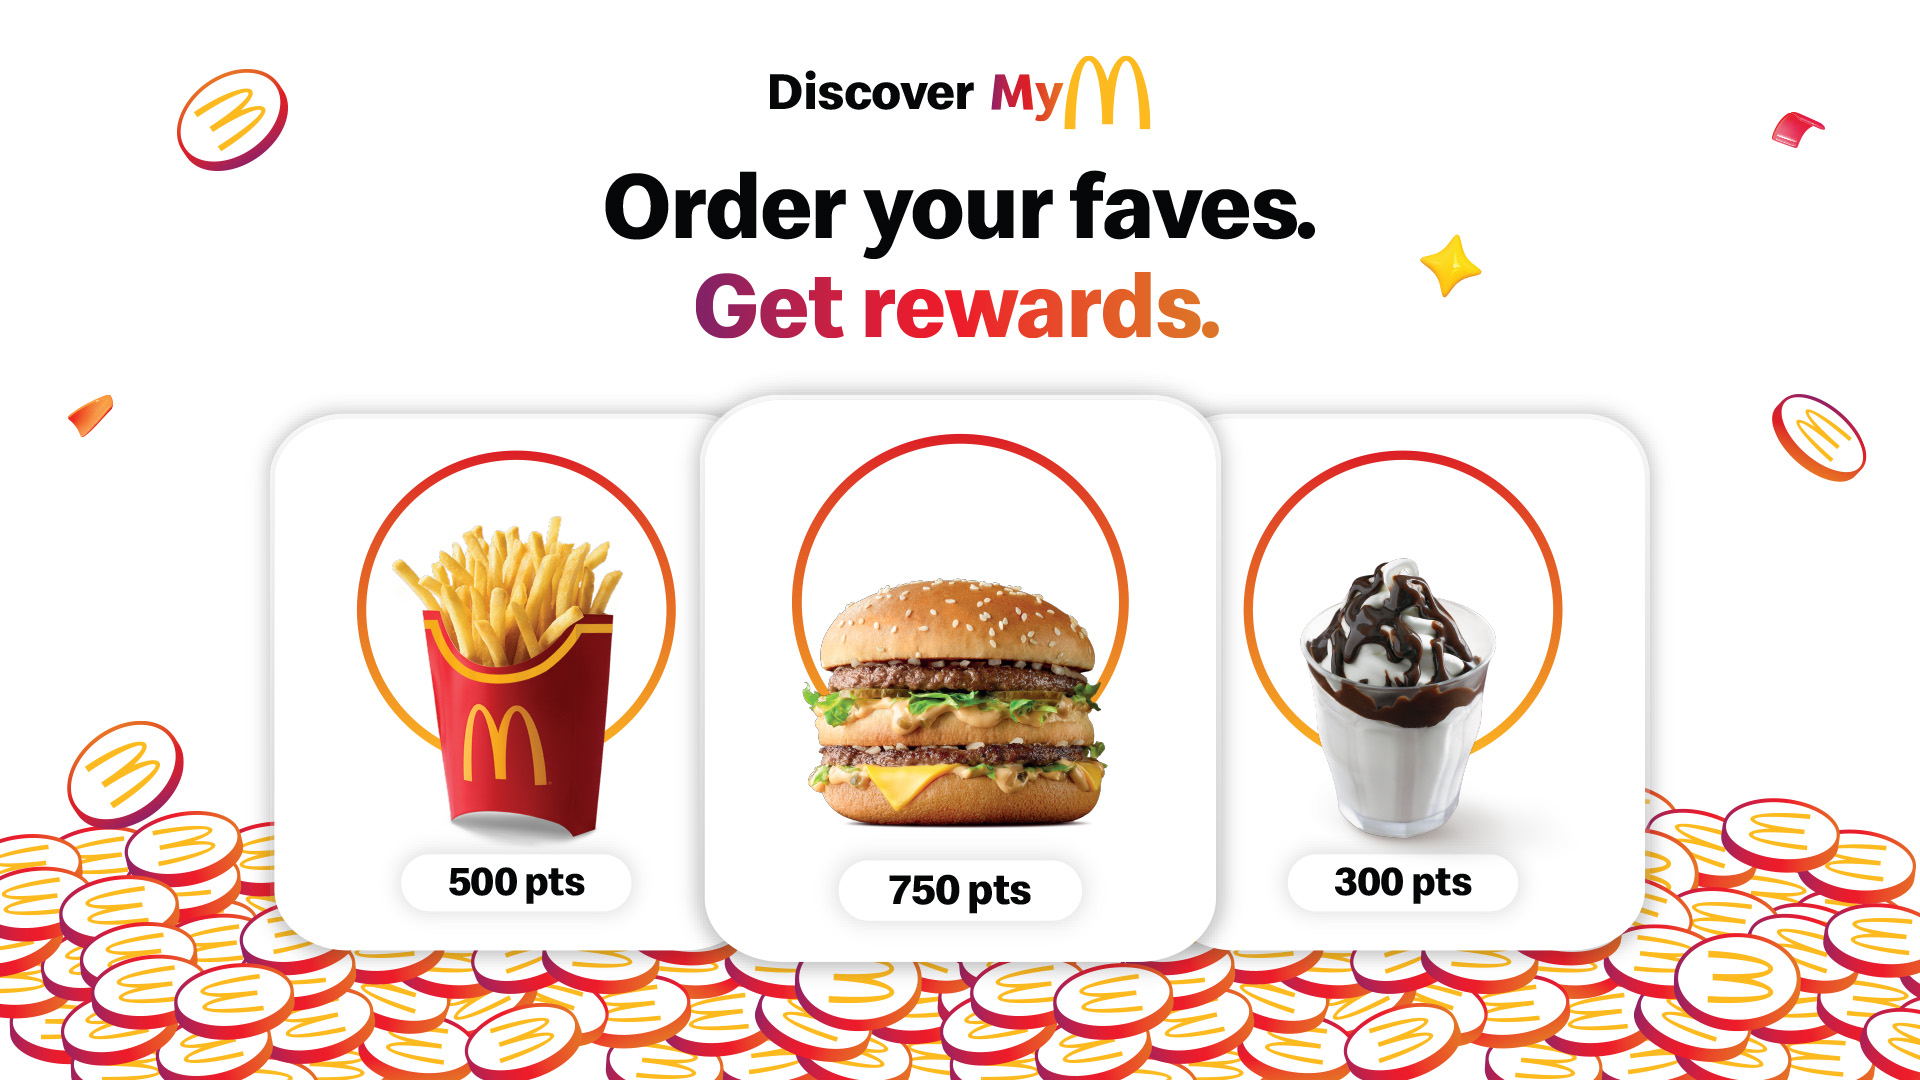 The McDonald’s app